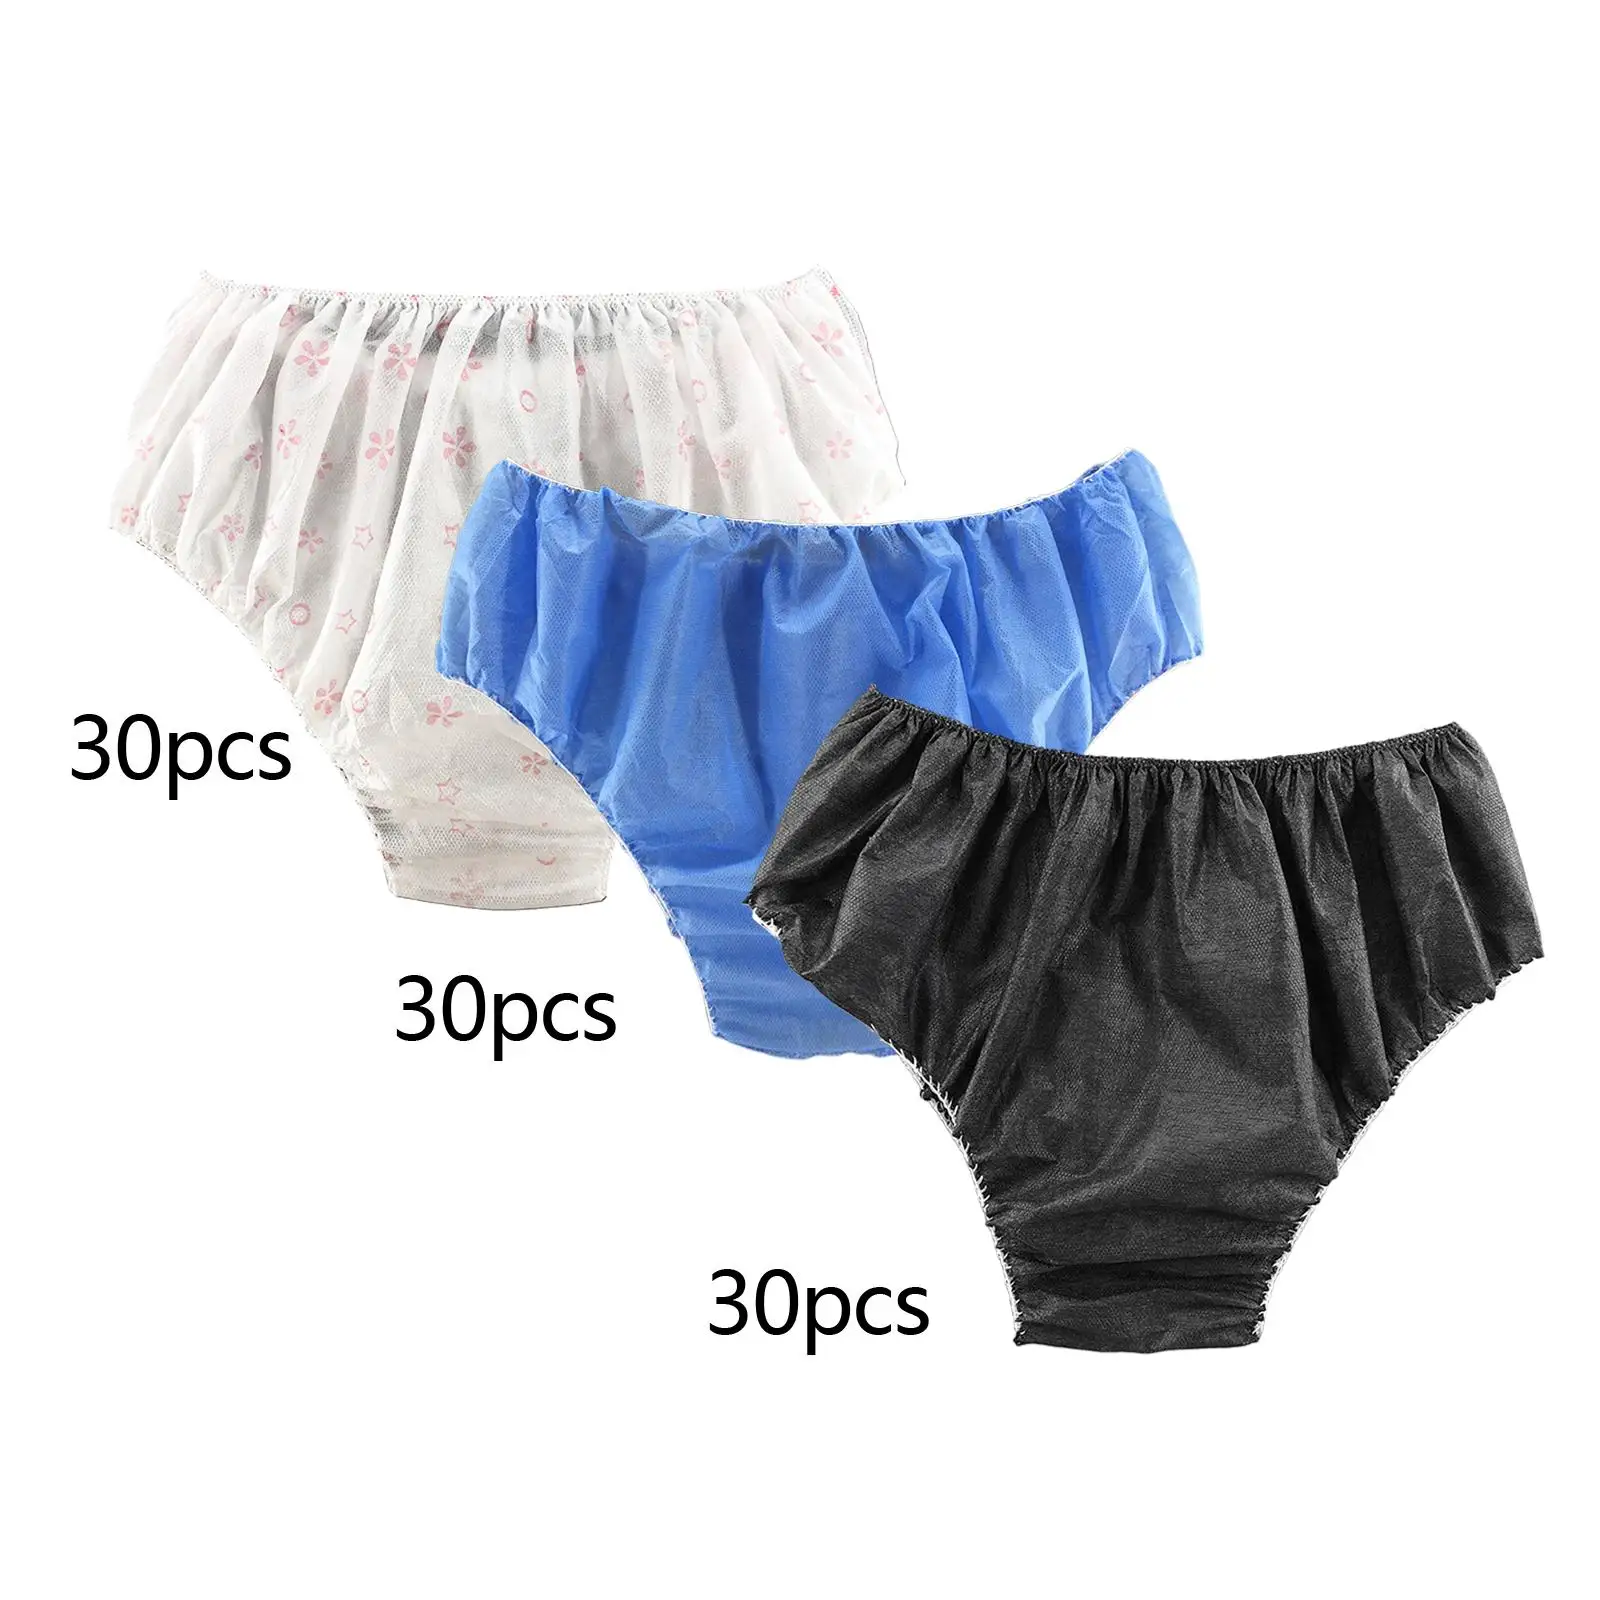 30x Disposable Panties Hygienic Soft Non Woven Fabrics Bikini Panties Underwear for SPA Bathroom Supplies Travel Women & Men